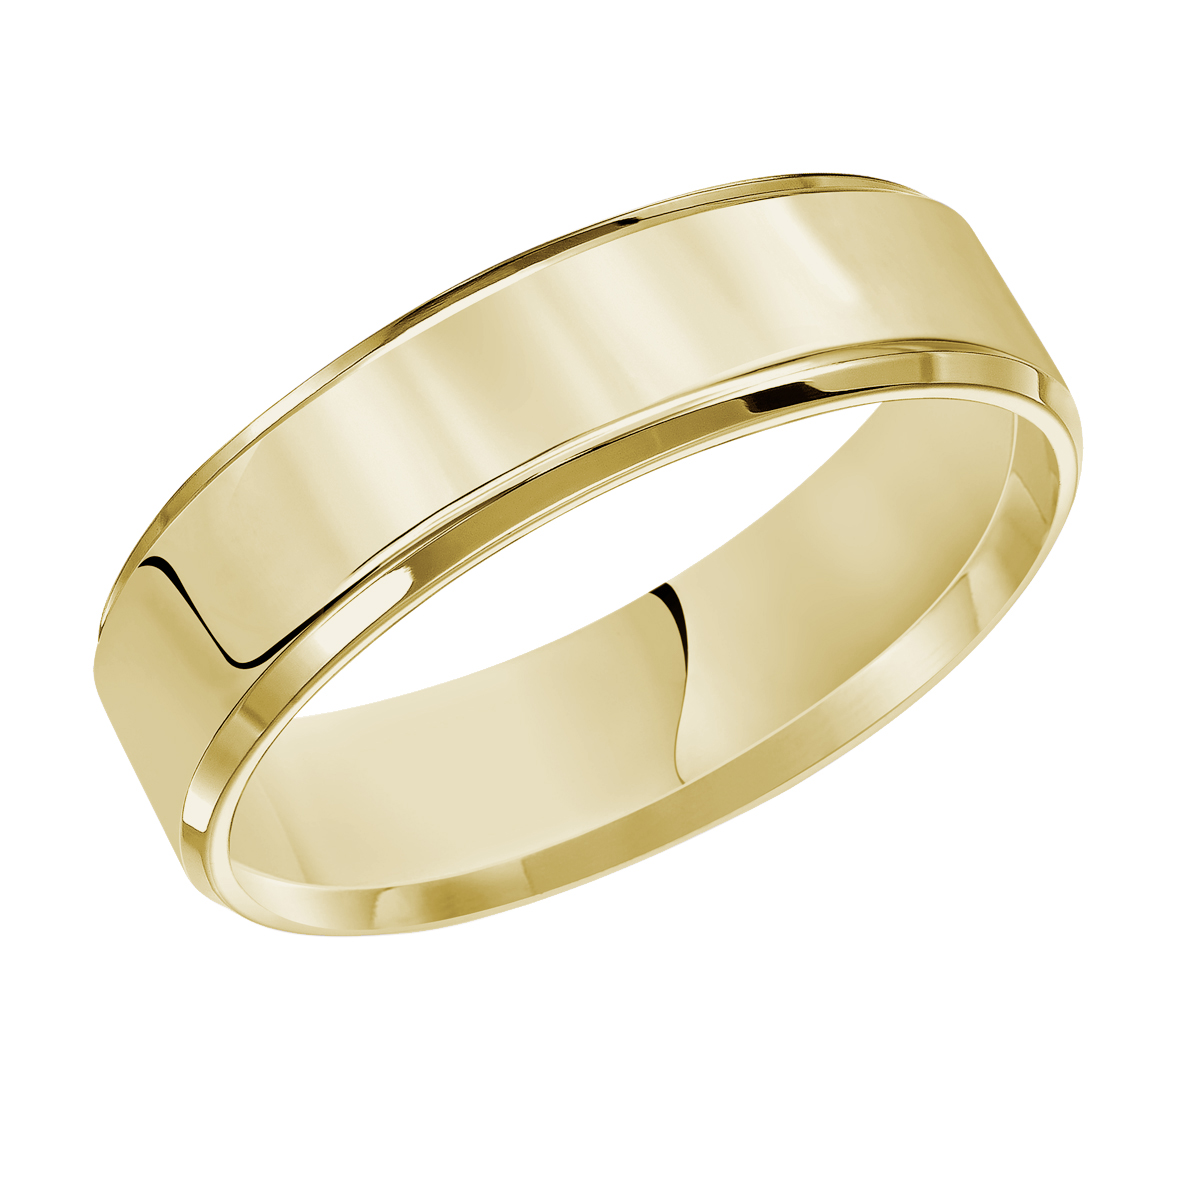 Yellow Gold Flat 5 mm Wedding Band with Beveled Edge, Size 8.5 | Borsheims